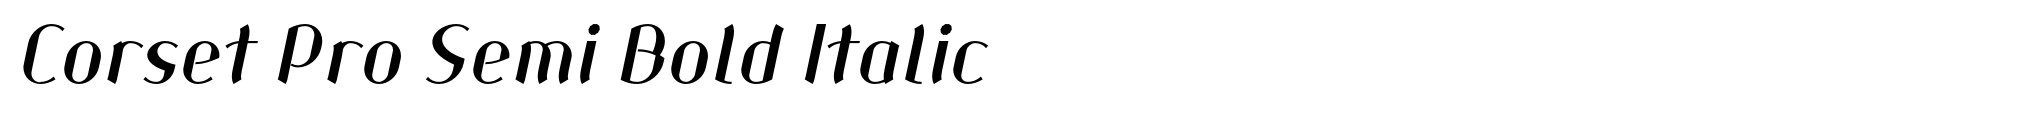 Corset Pro Semi Bold Italic image